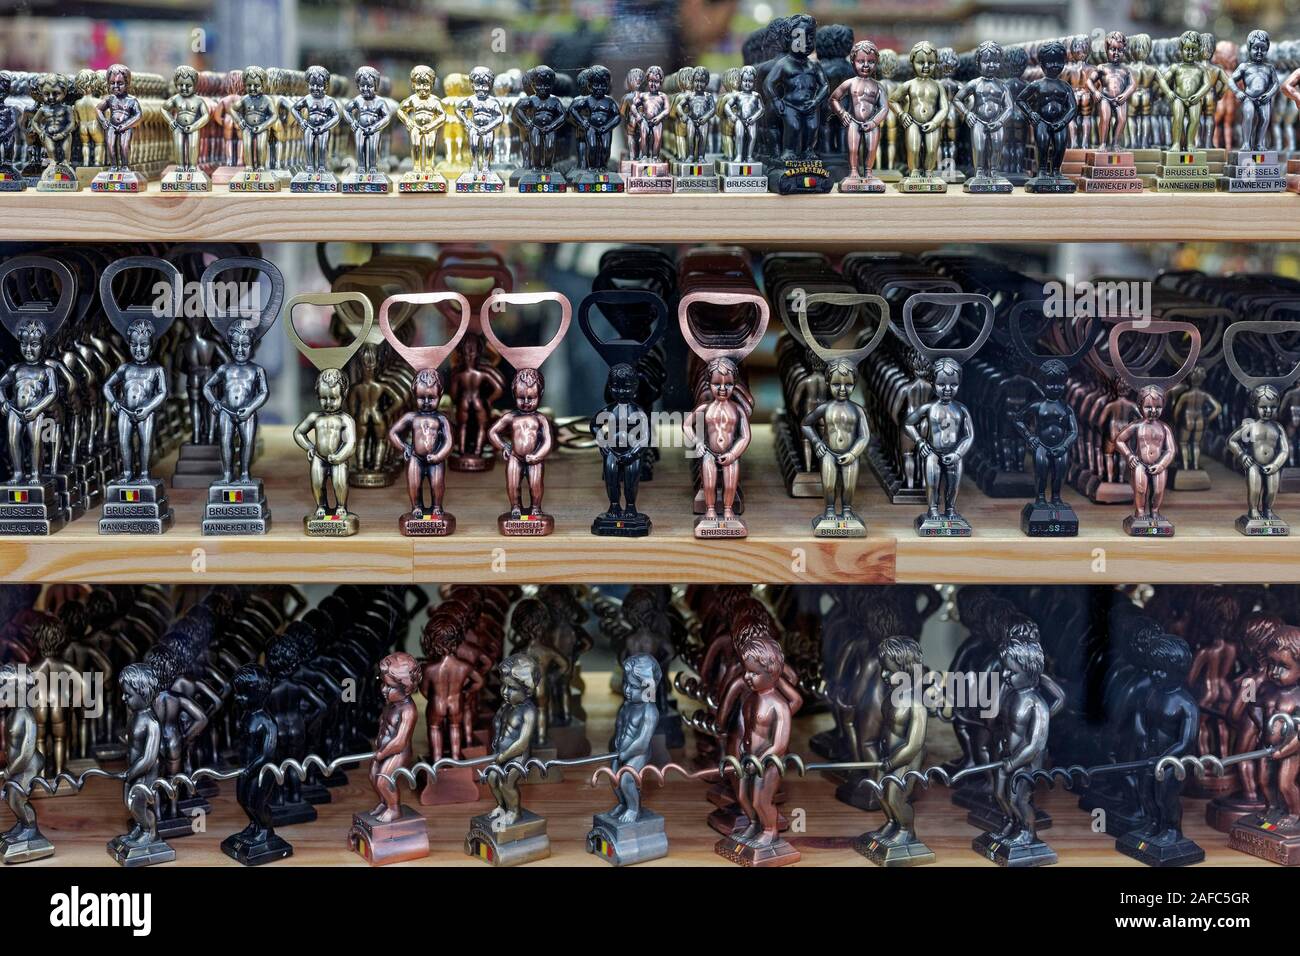 Small Manneken Pis figures as bottle openers and corkscrews in display in shop window, souvenir, Brussels, Belgium Stock Photo